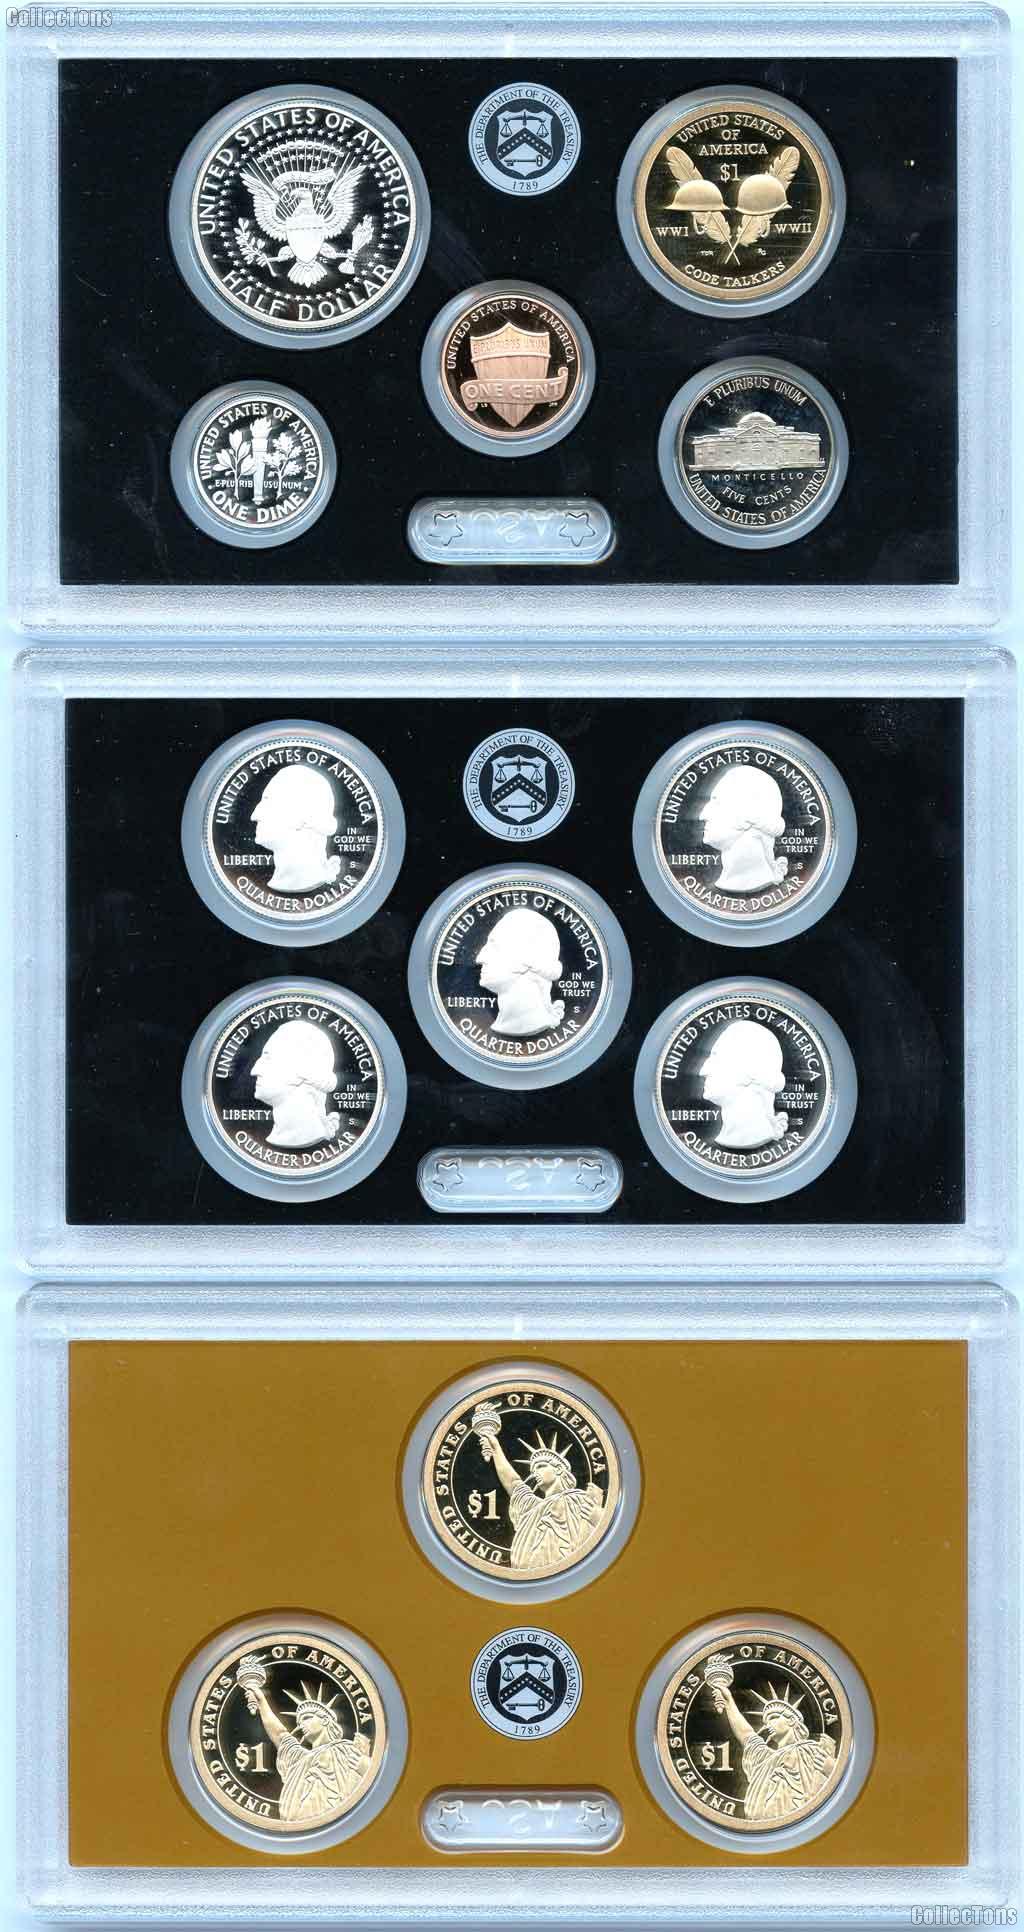 2016 SILVER PROOF SET * ORIGINAL * 13 Coin U.S. Mint Proof Set